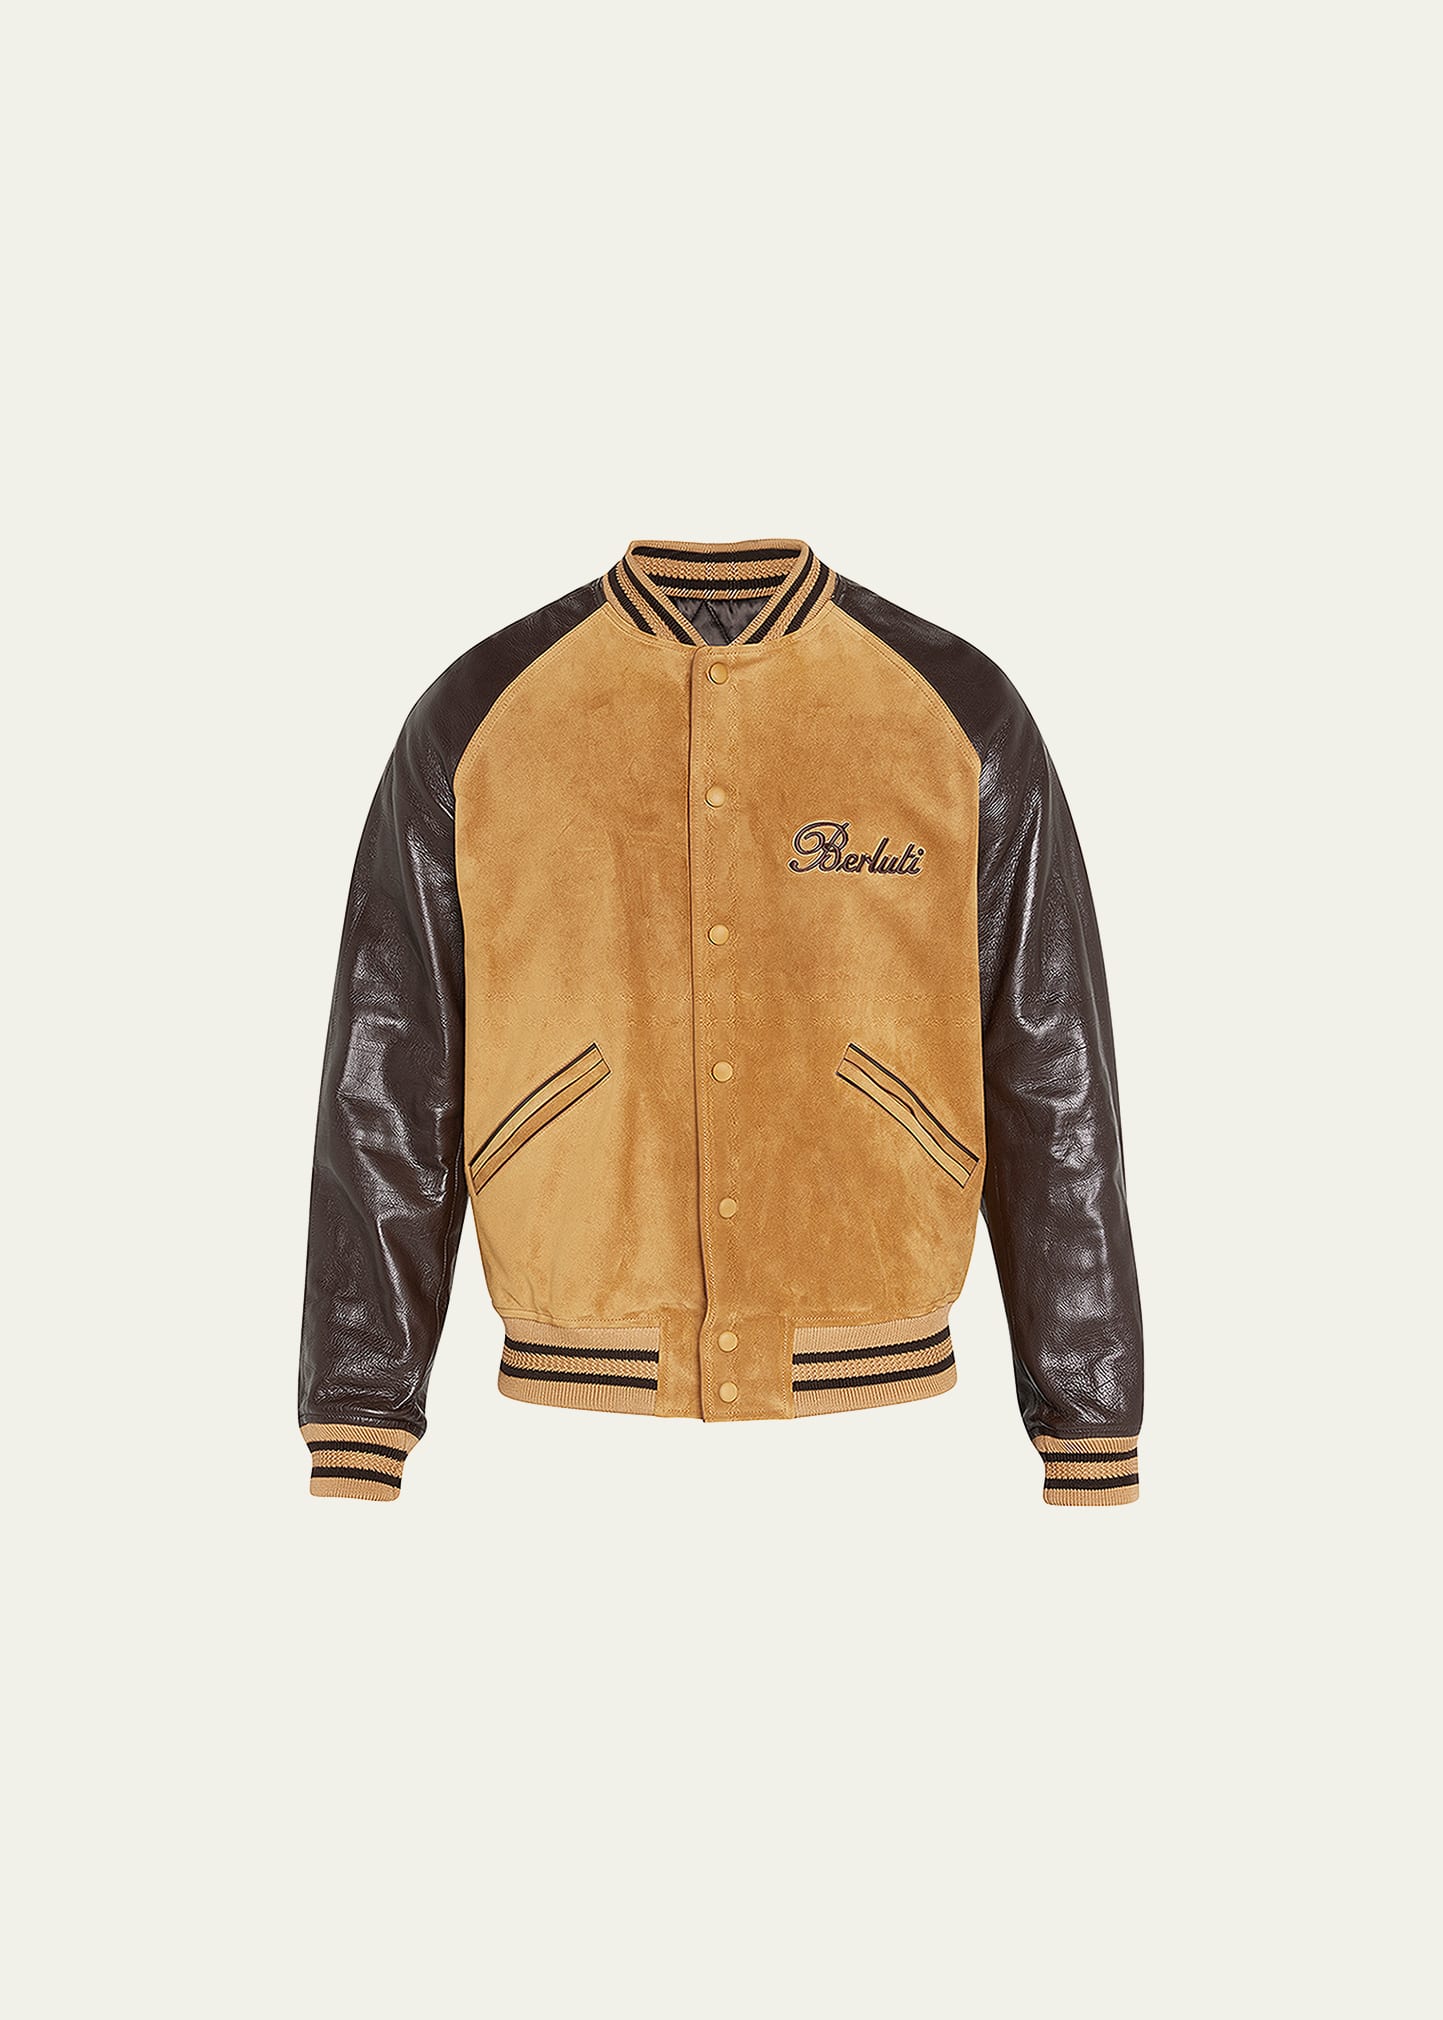 Berluti Men's Suede-Leather Varsity Jacket